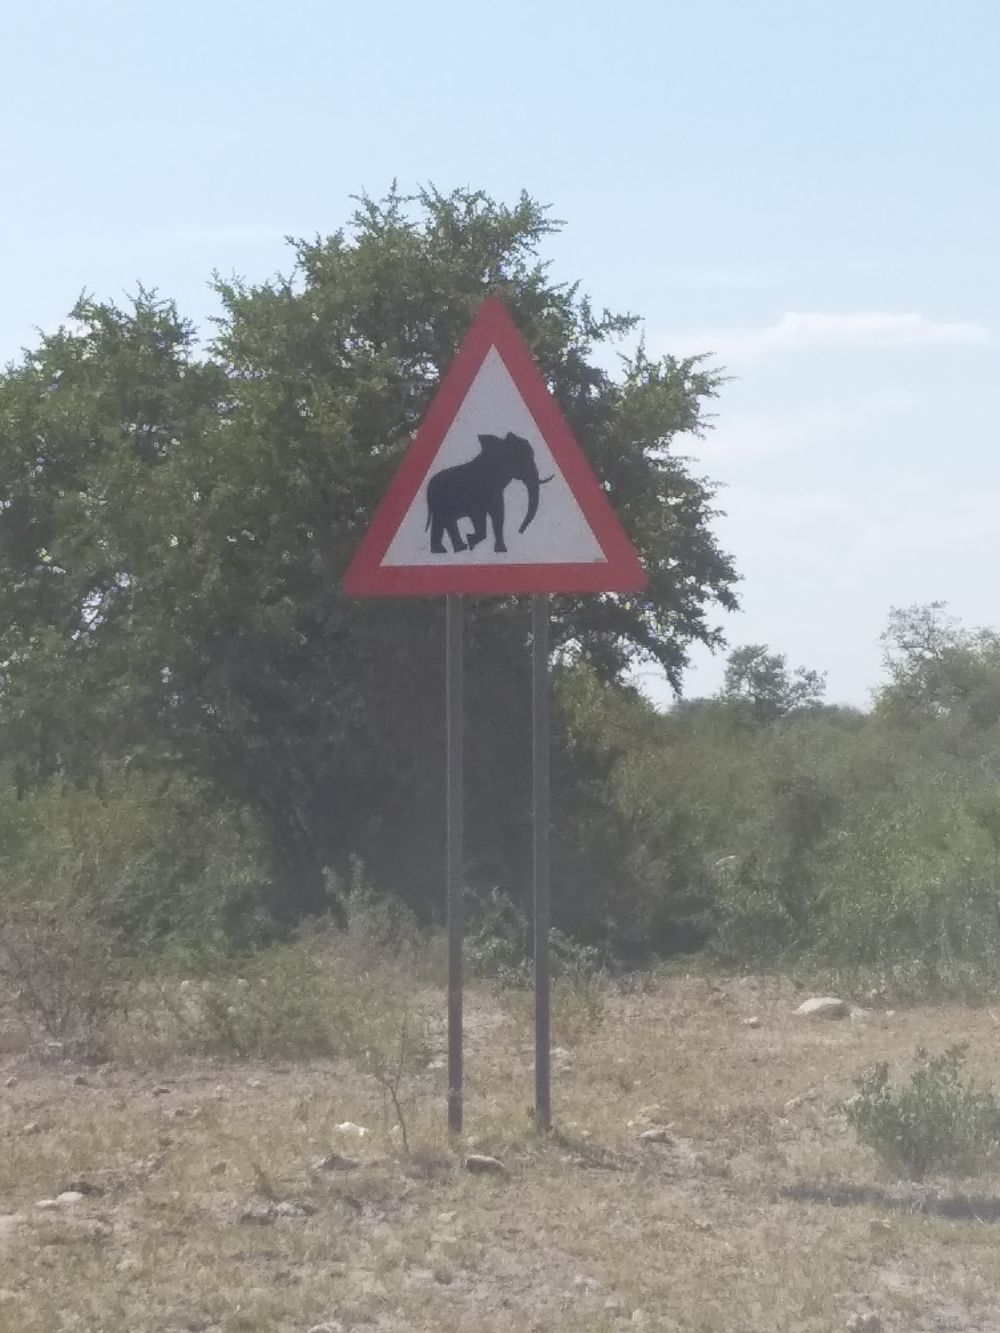 ... pozor sloni 